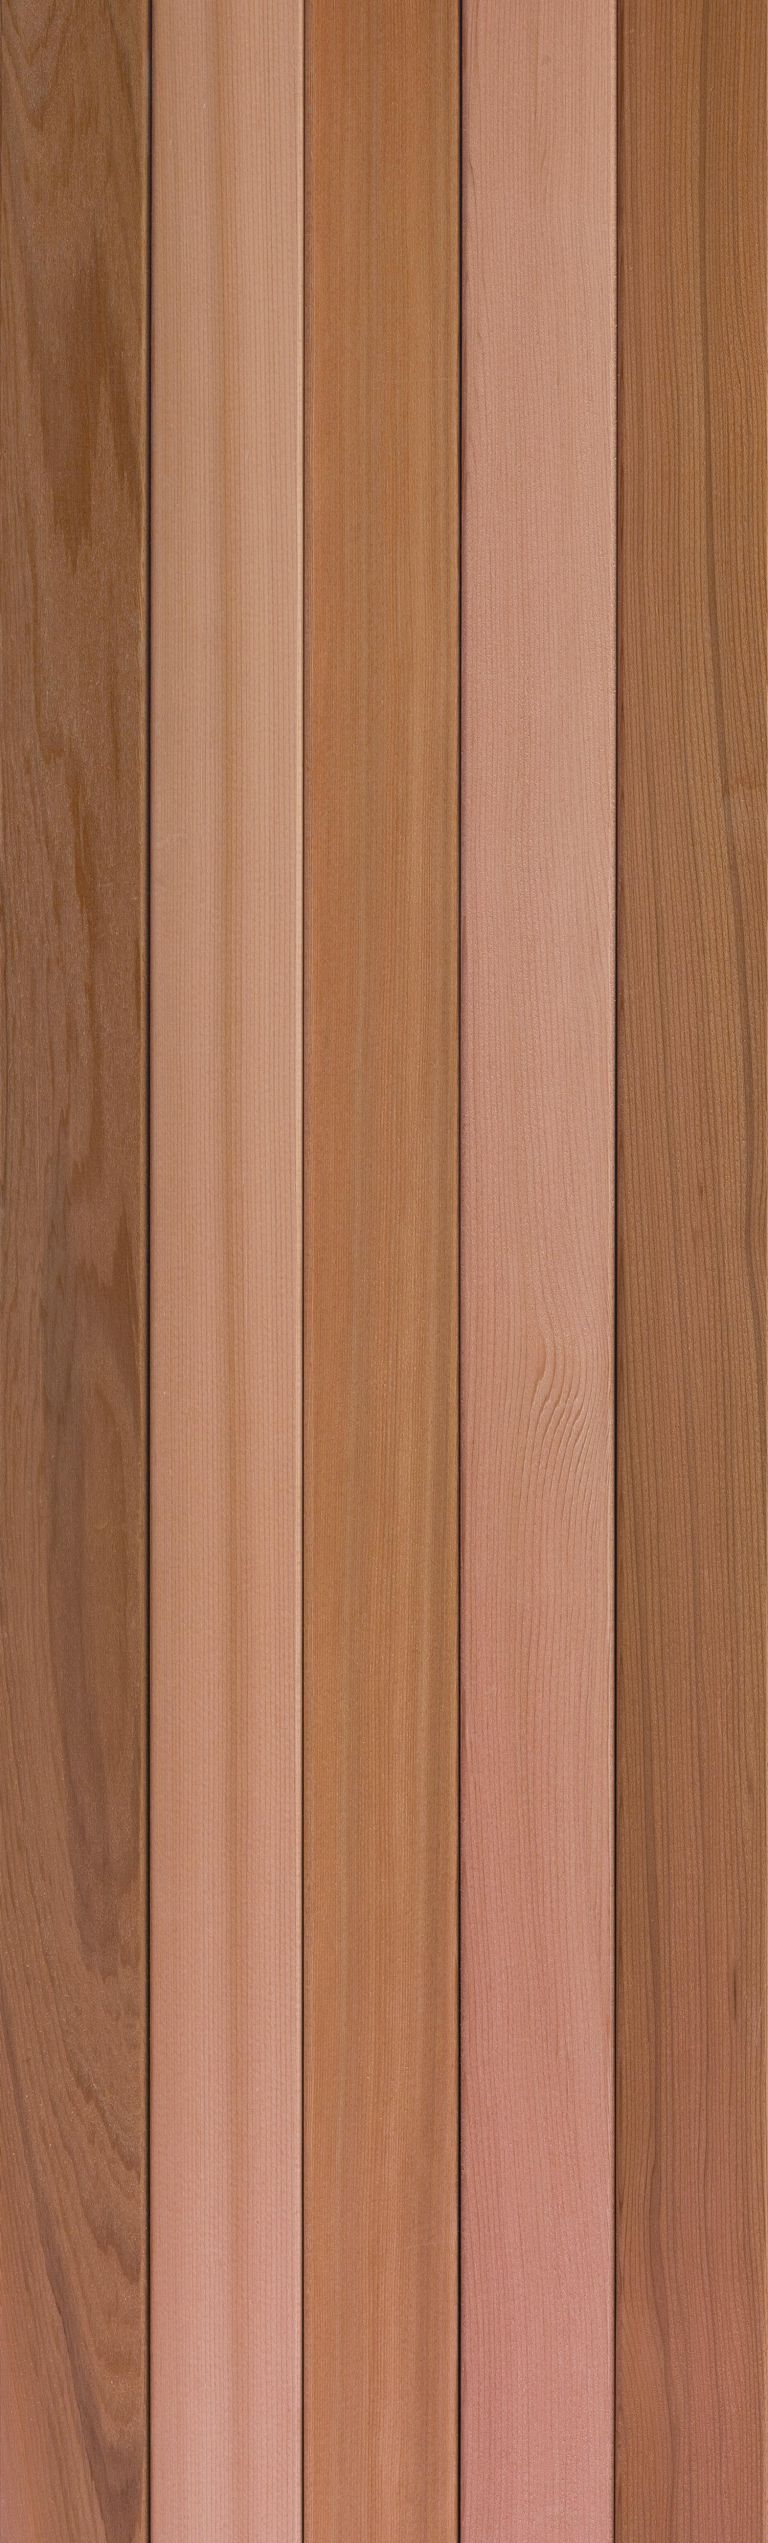 Cedar Slats showing Natural Variation in Colour